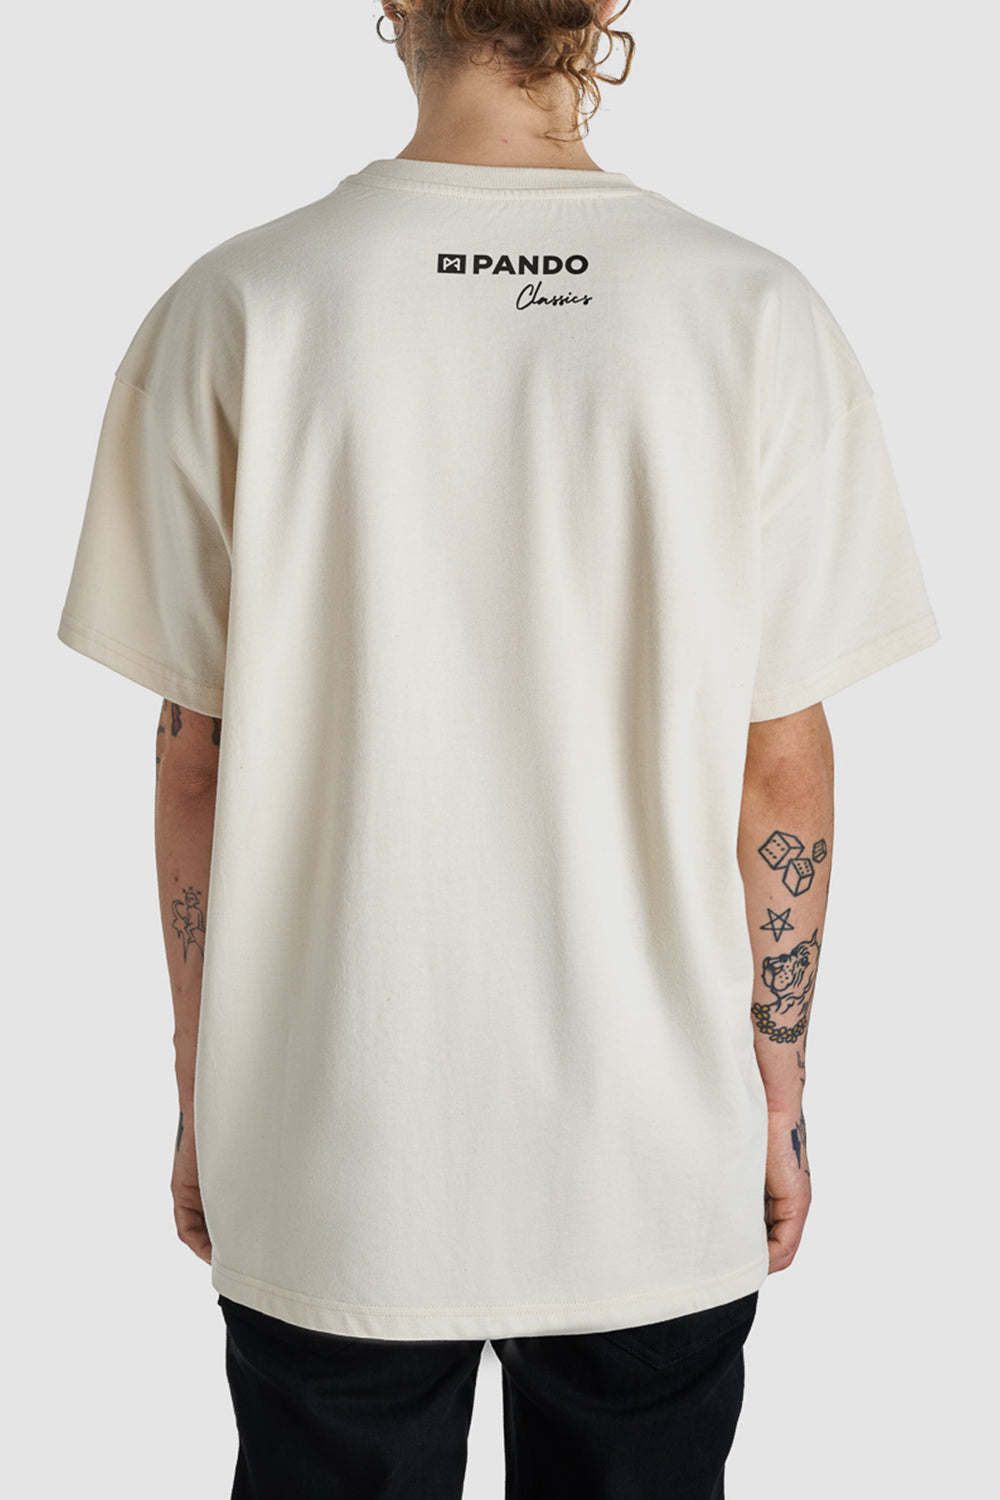 Pando Moto Classics Spark Raw Oversize T-Shirt